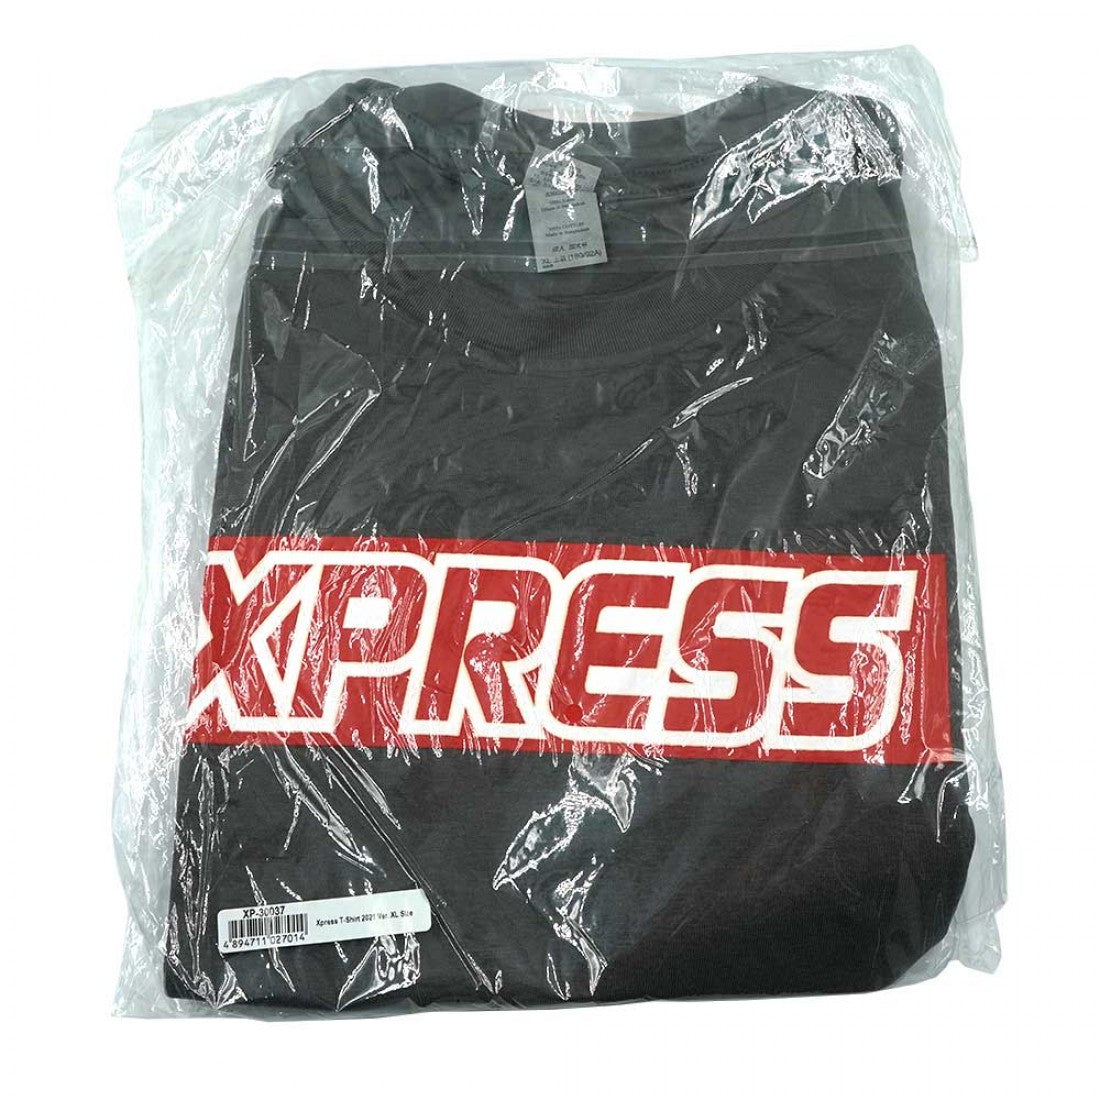 Xpress 2021 Logo T-Shirt